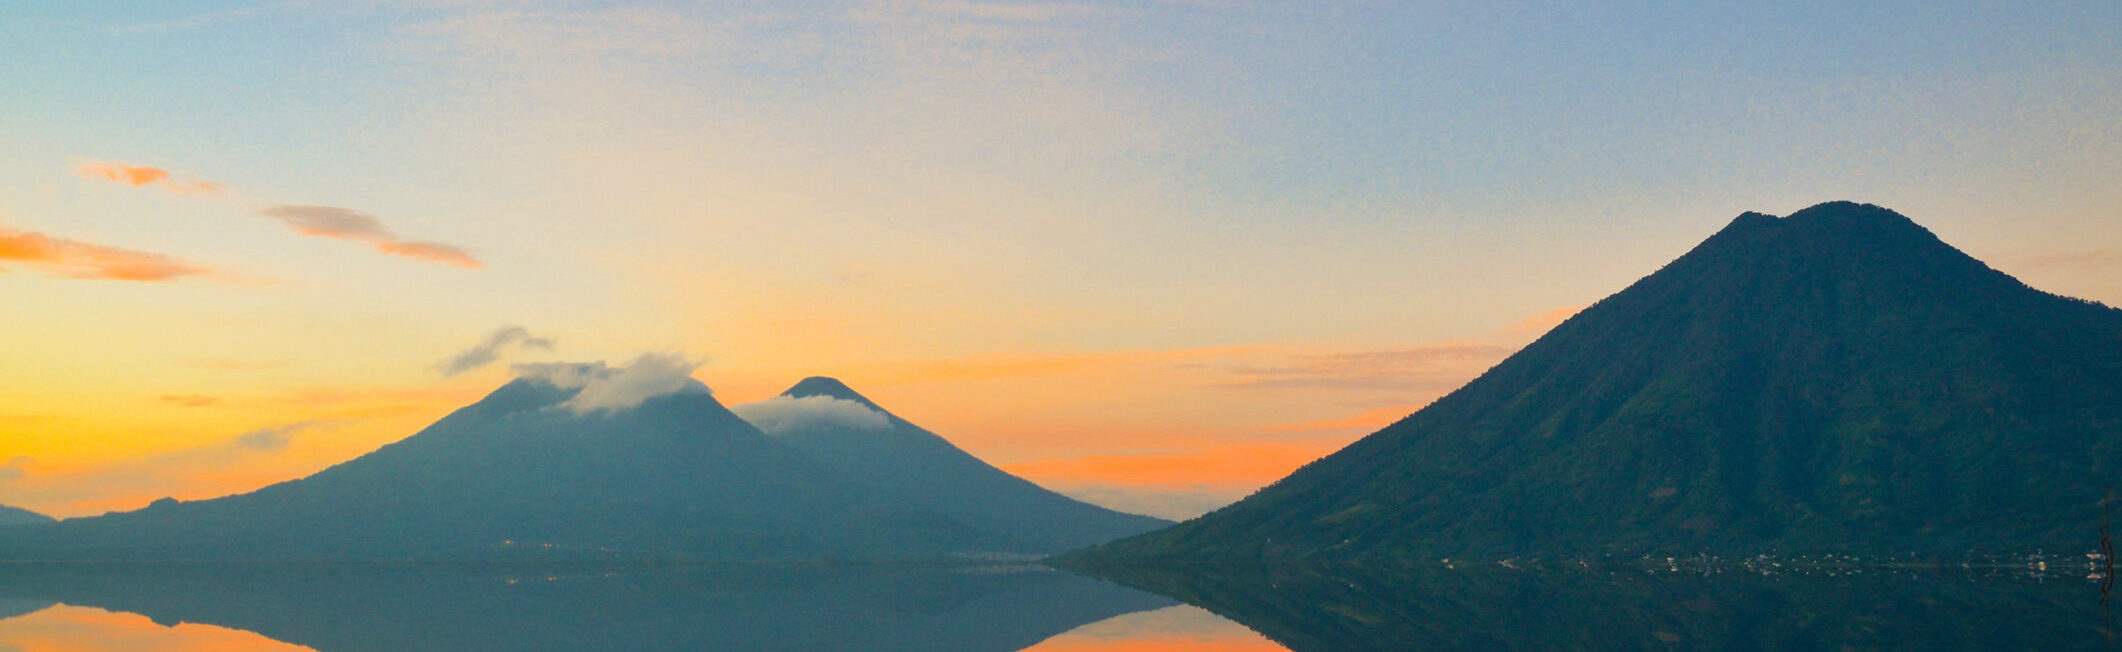 Observing the incredible beautiful sunrise at Lake Atitlan in Guatemala.